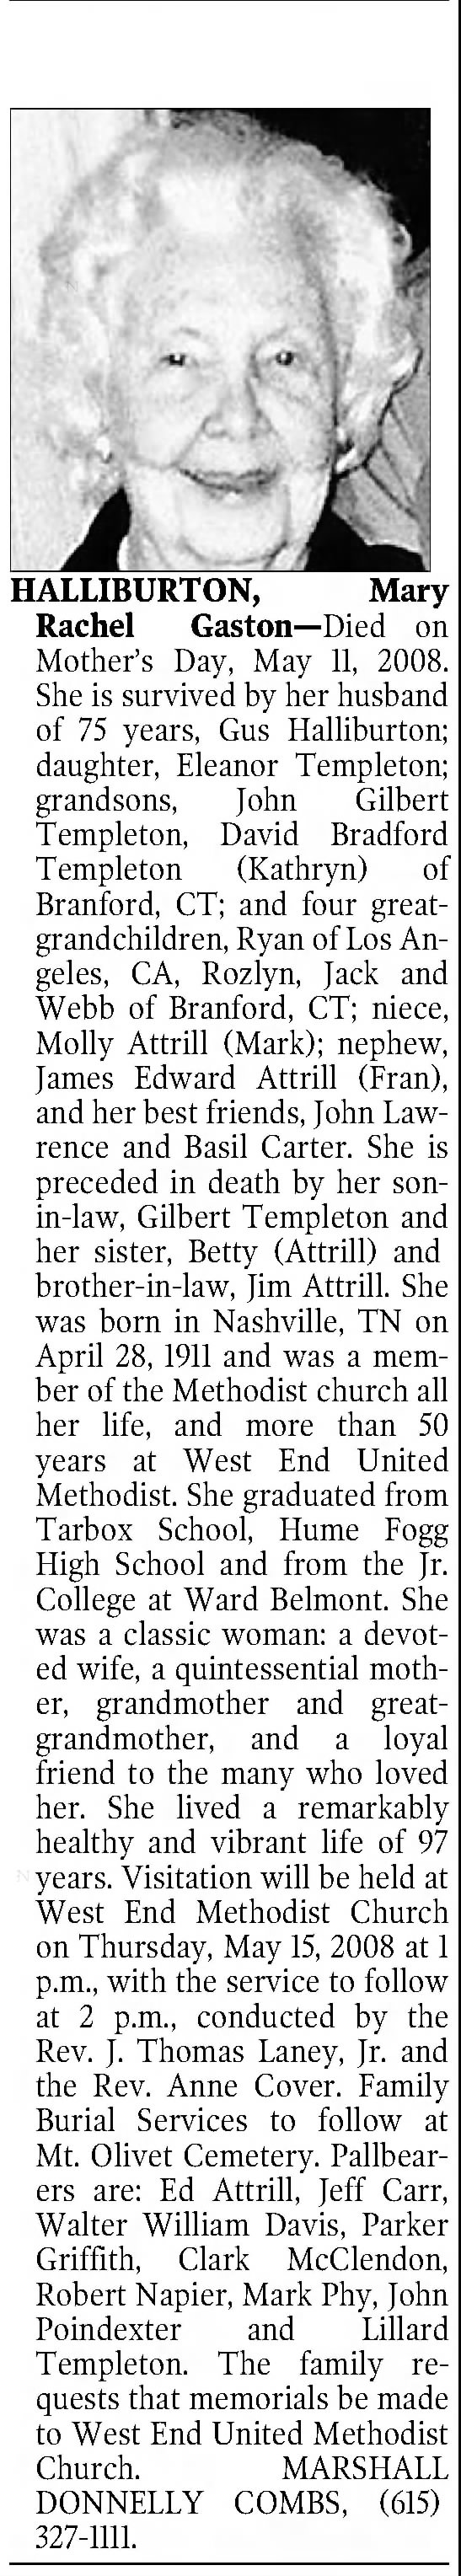 Obituary for Mary Rachel HALLIBURTON Gaston, 1911-2008 ...